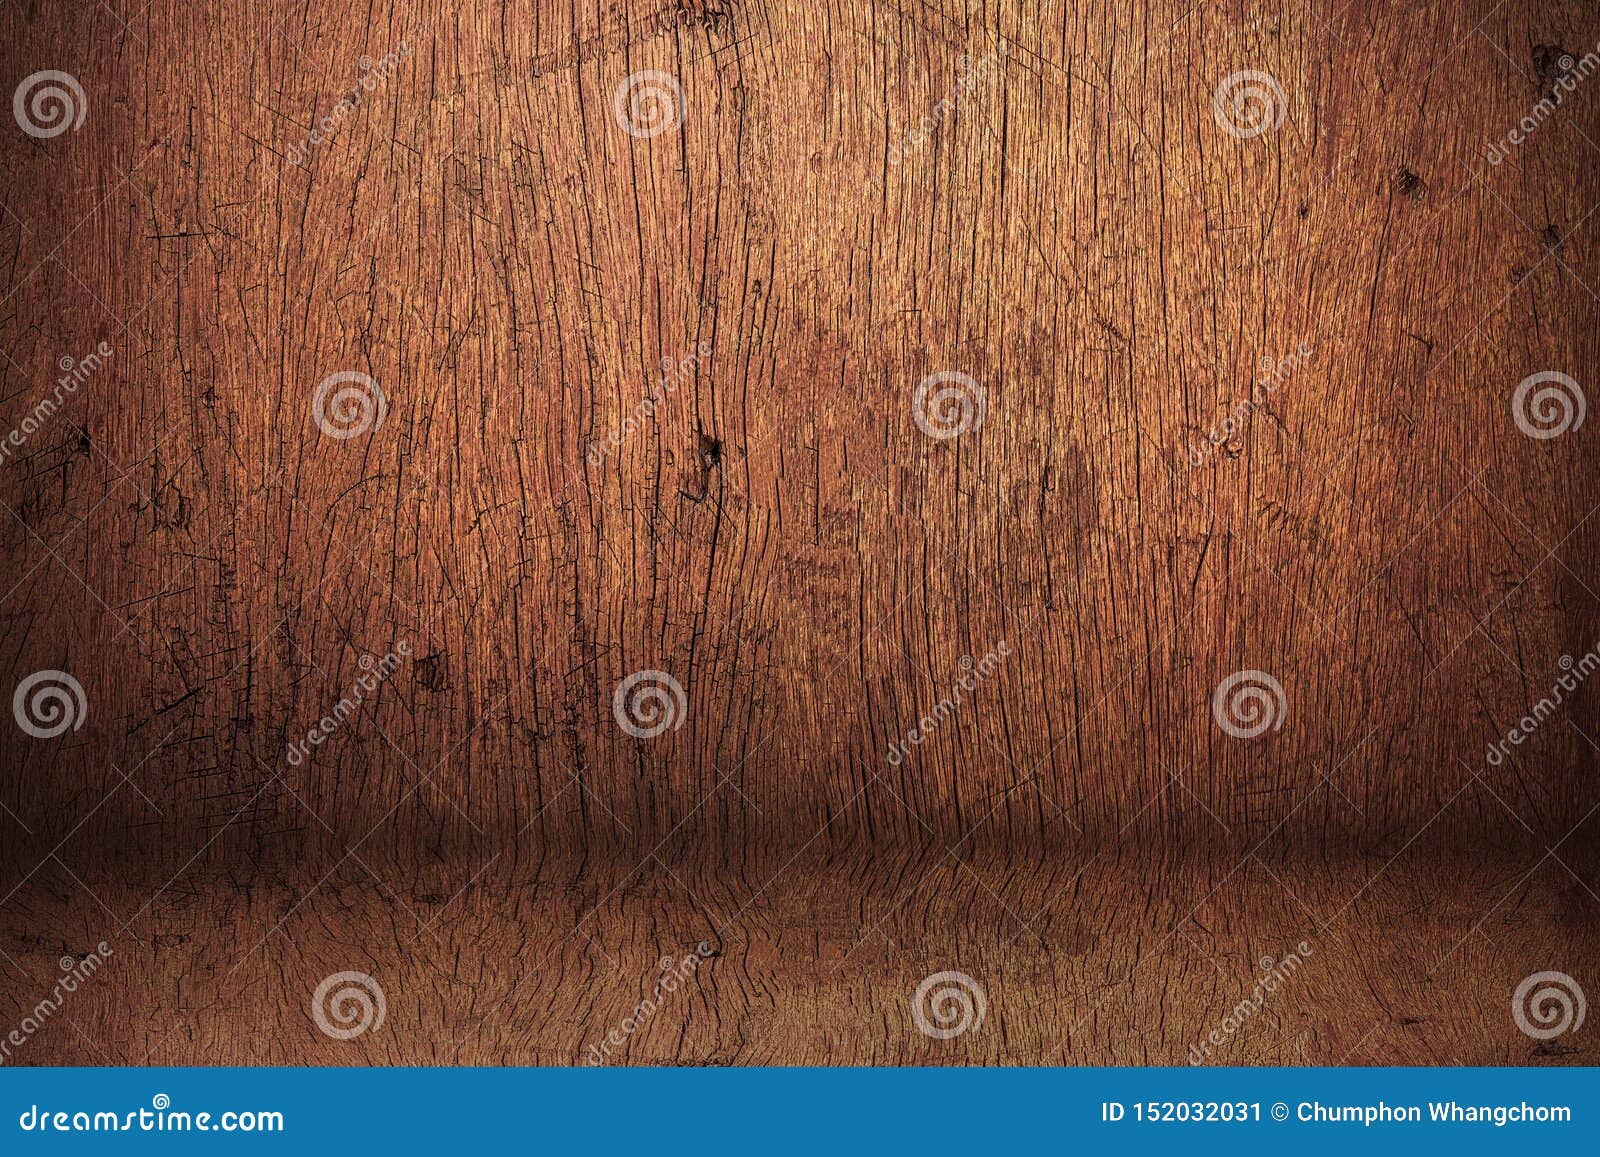 wood backdrops background. blank vintage studio made from wooden shelf